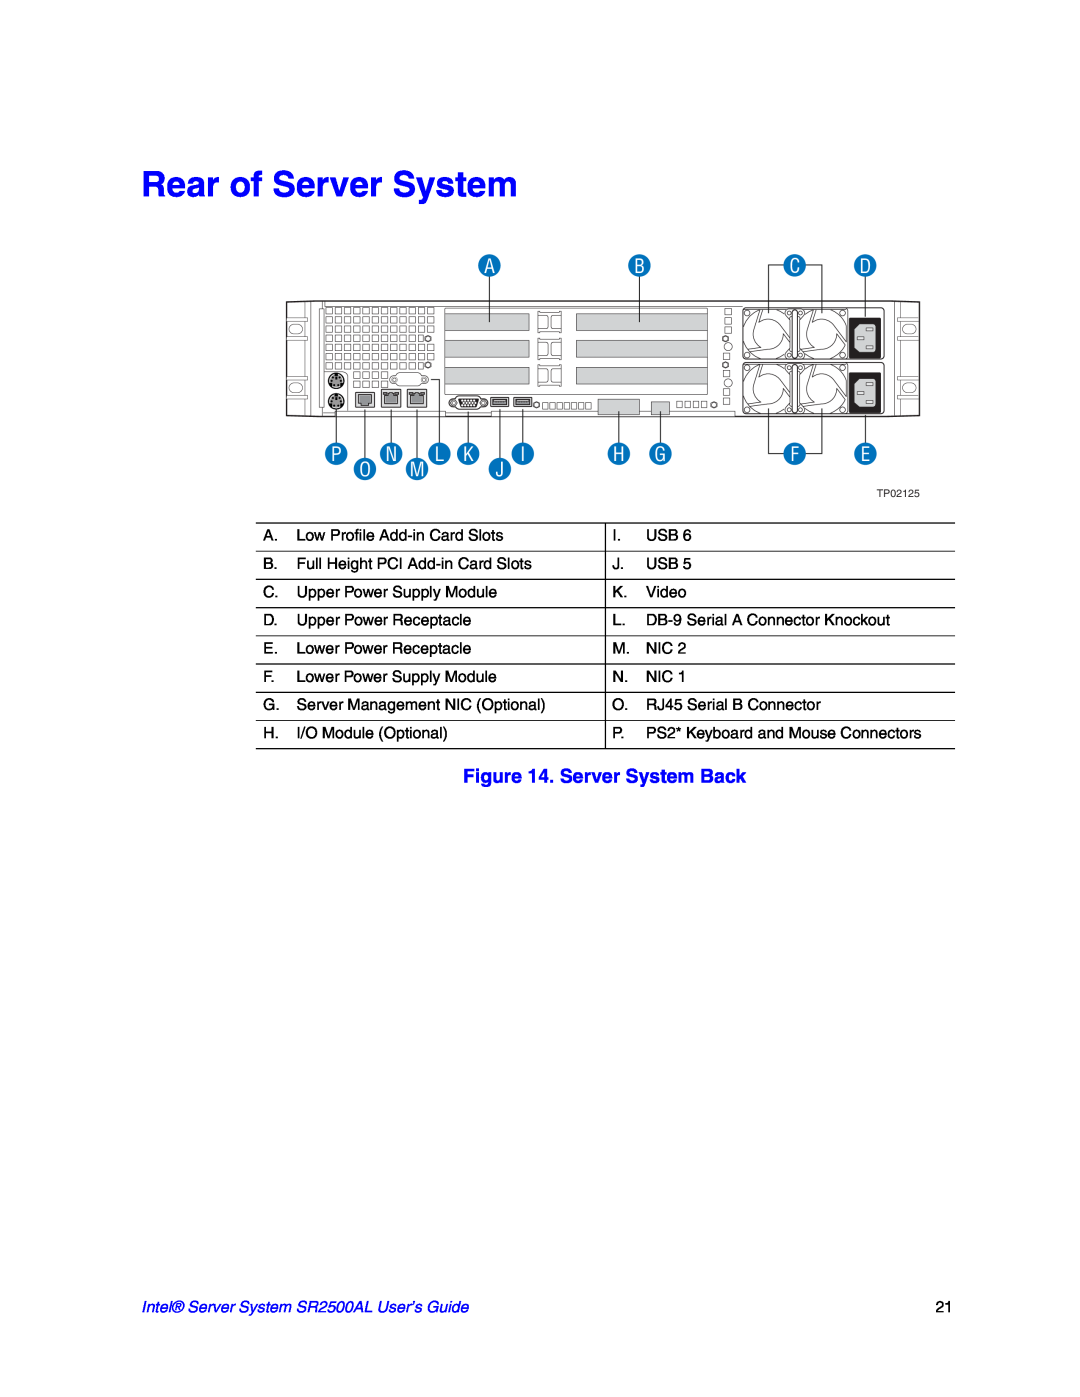 Intel manual Rear of Server System, P N L K I H G O M J, Server System Back, Intel Server System SR2500AL User’s Guide 